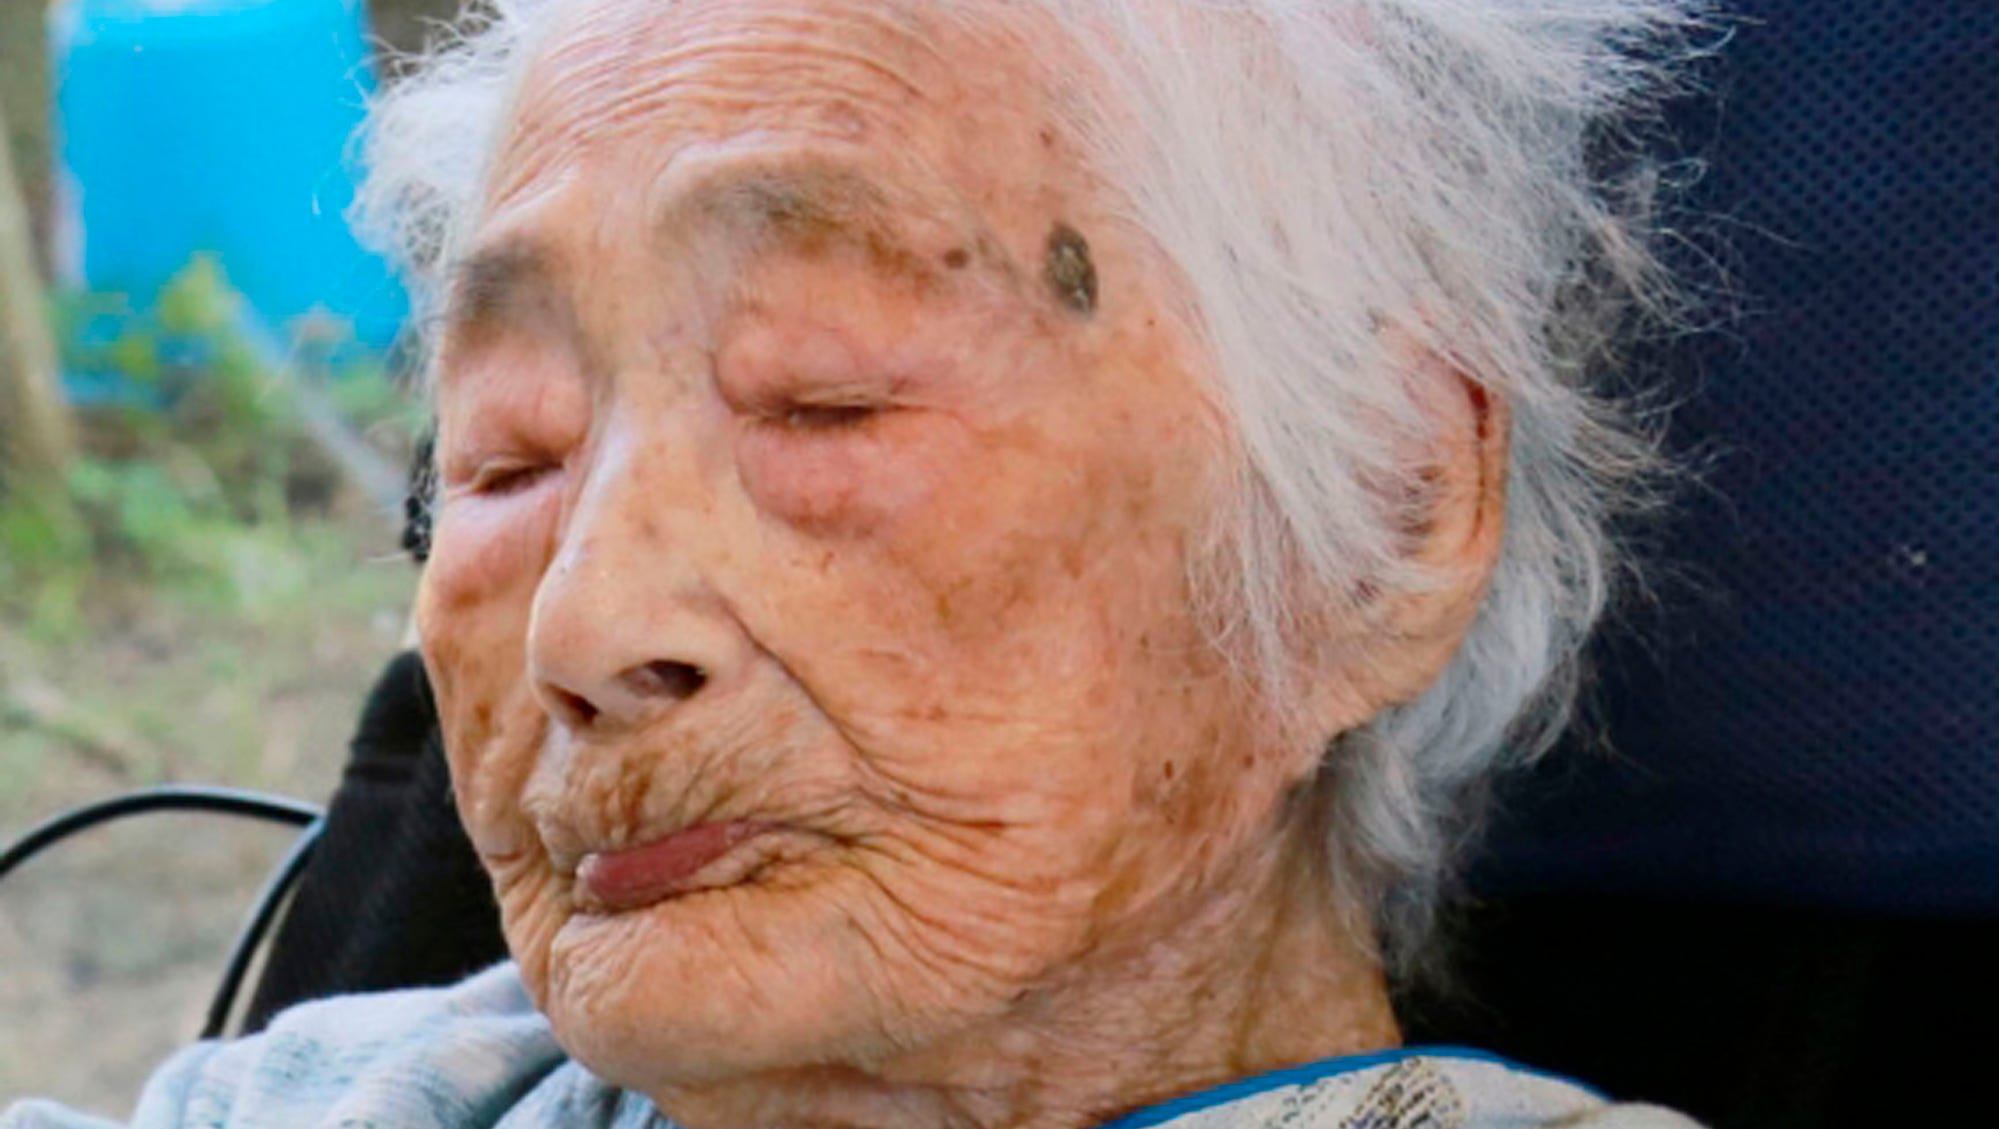 World's oldest person, last survivor of 19th century, dies in Japan at 117